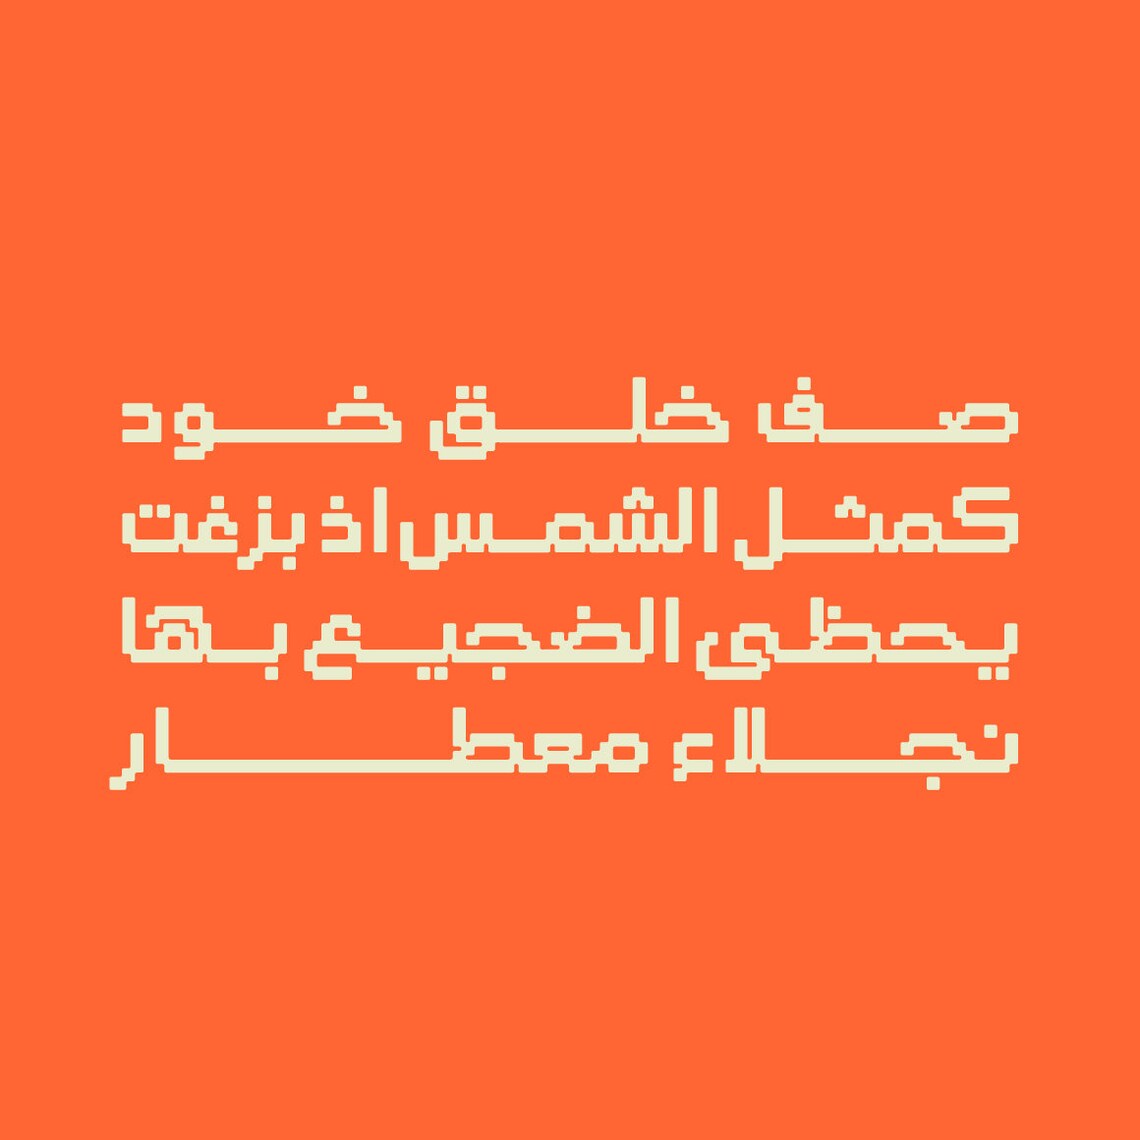 Raqami Arabic Font arabic Calligraphy Font, Islamic Calligraphy Arabic ...